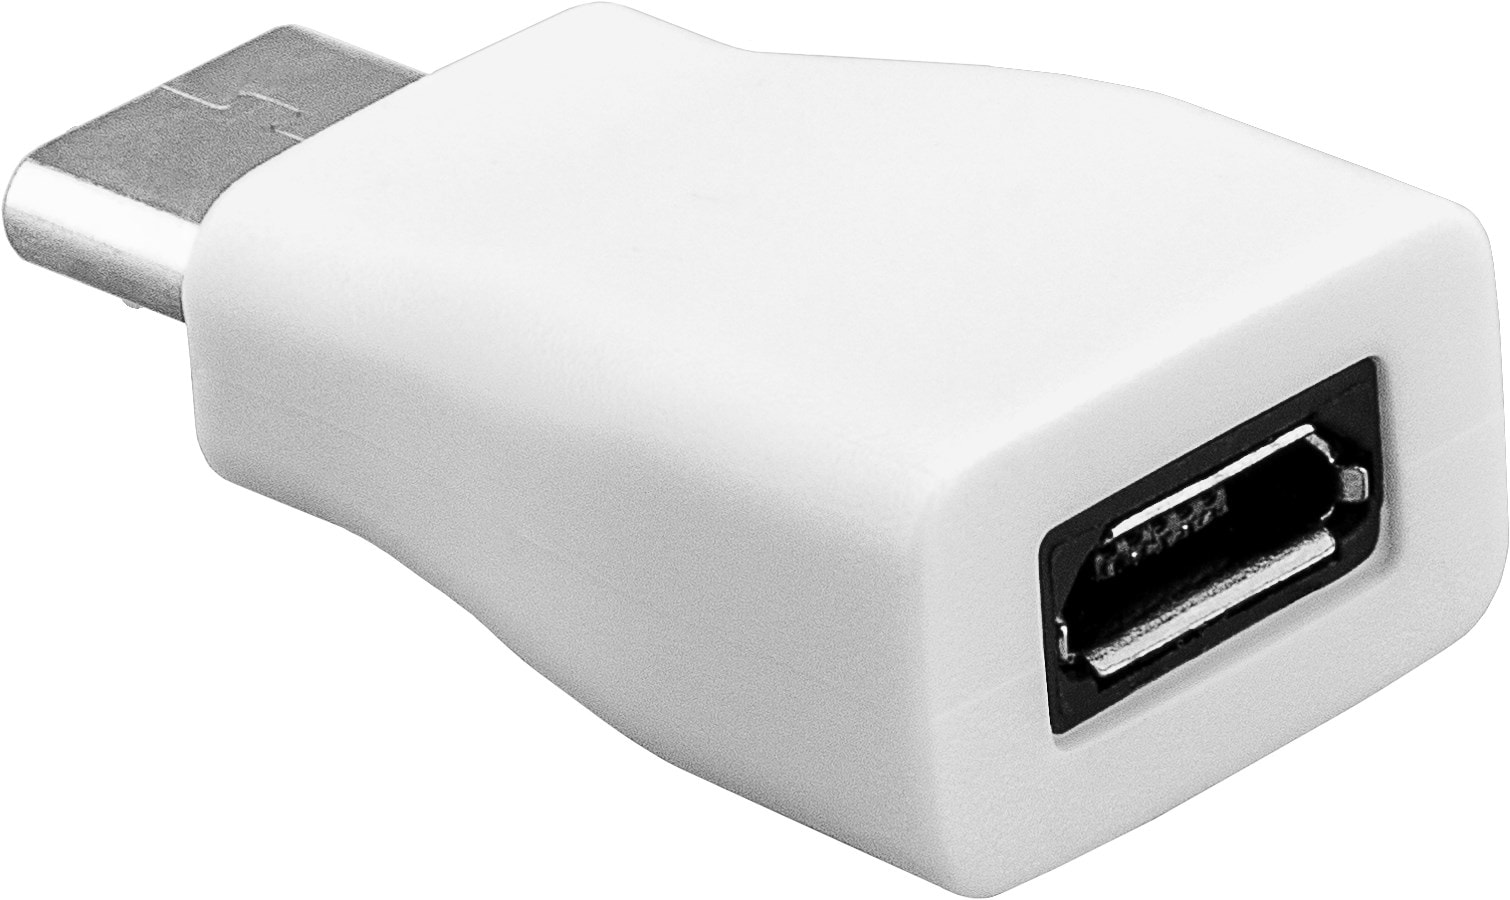 USB-C adapter – USB 2.0 micro B port